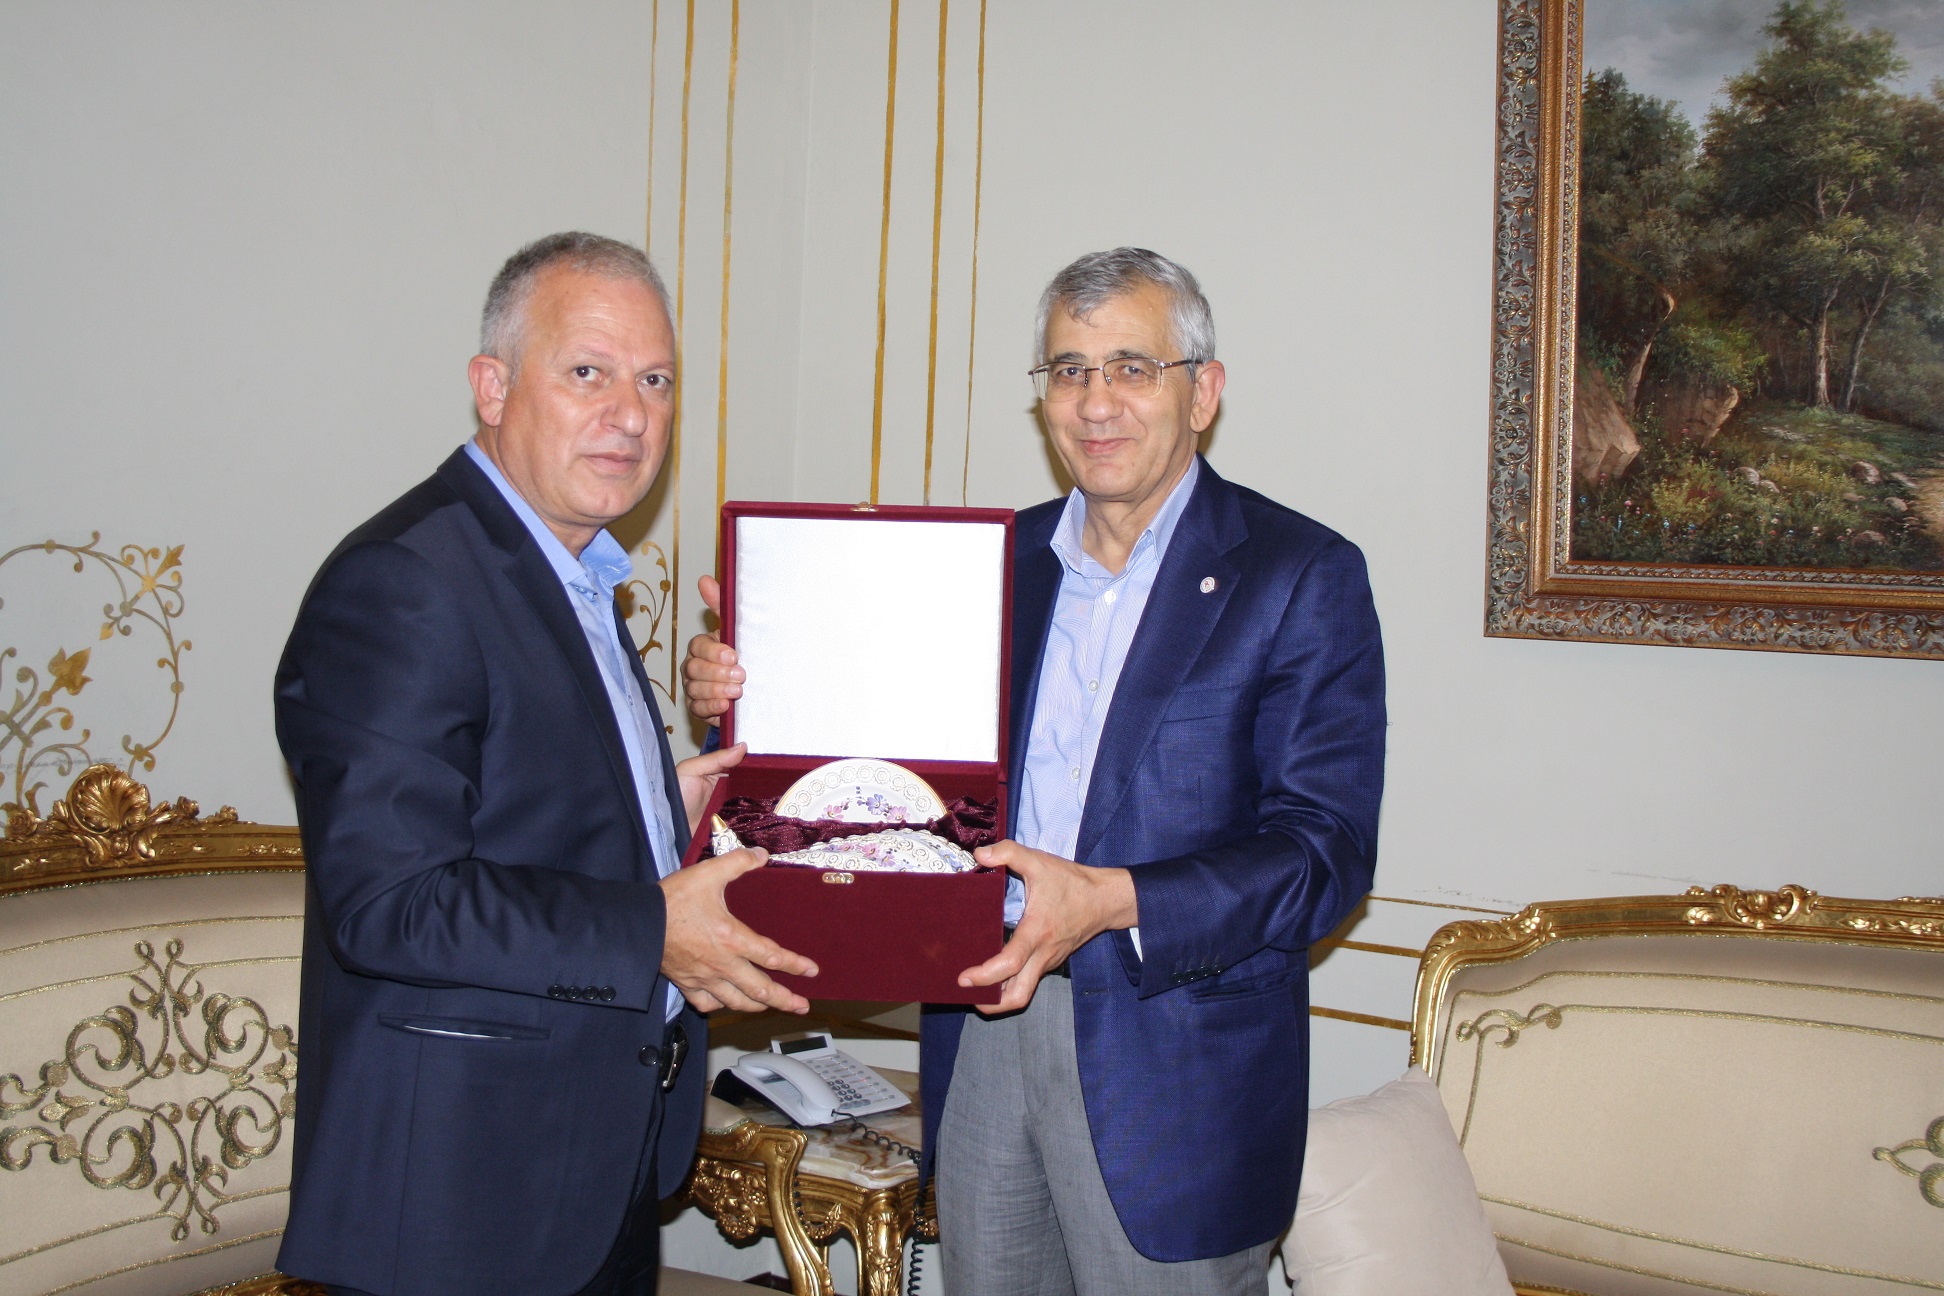 Founder of Khazar University Visits Yildiz Technical University